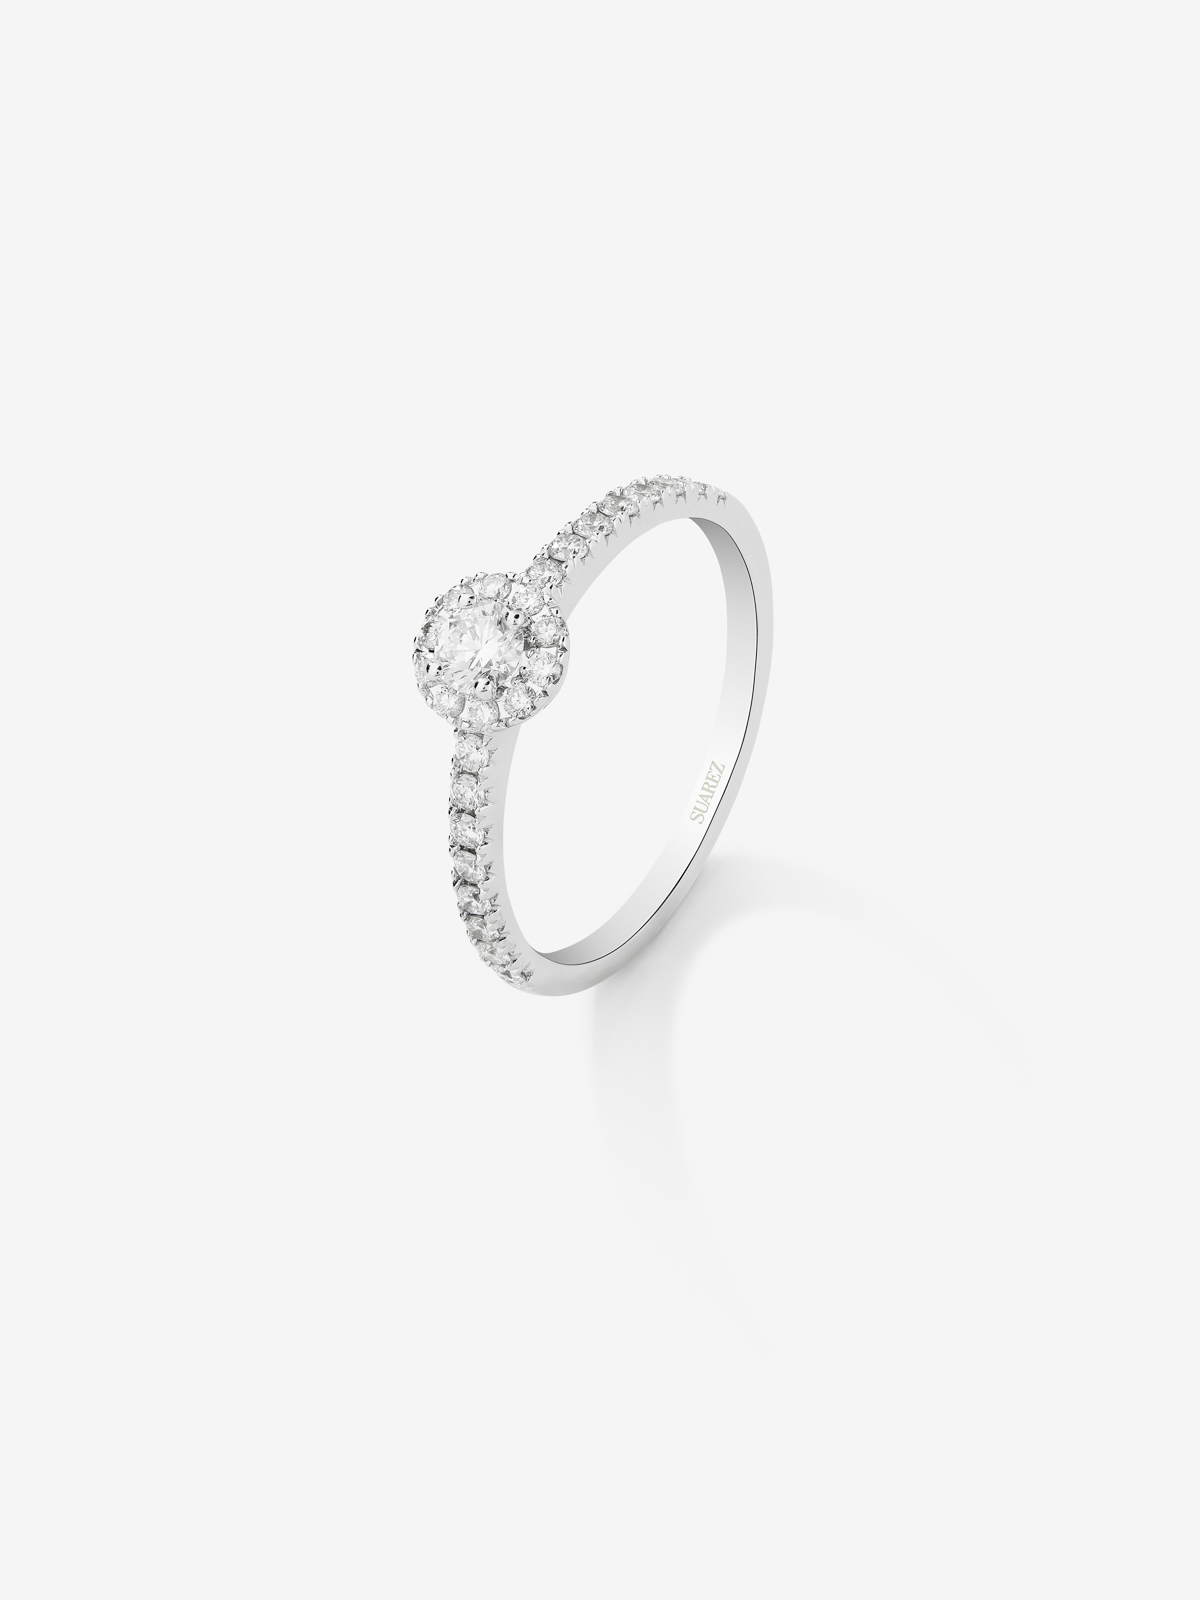 18K White Gold Commitment Ring with Orla de Diamonds